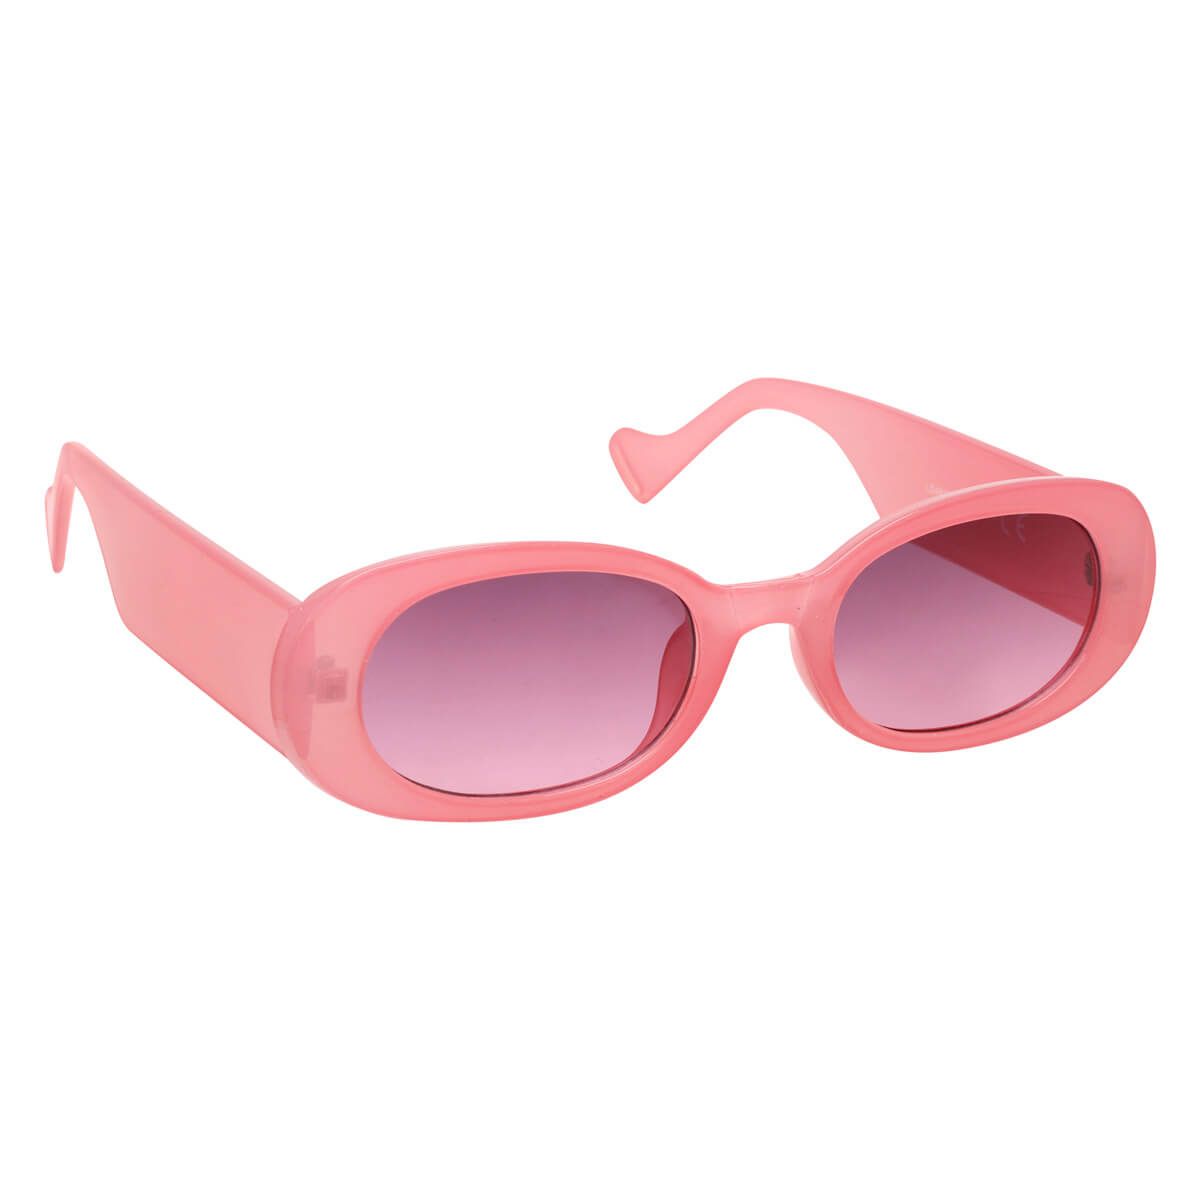 Rounded rectangular sunglasses